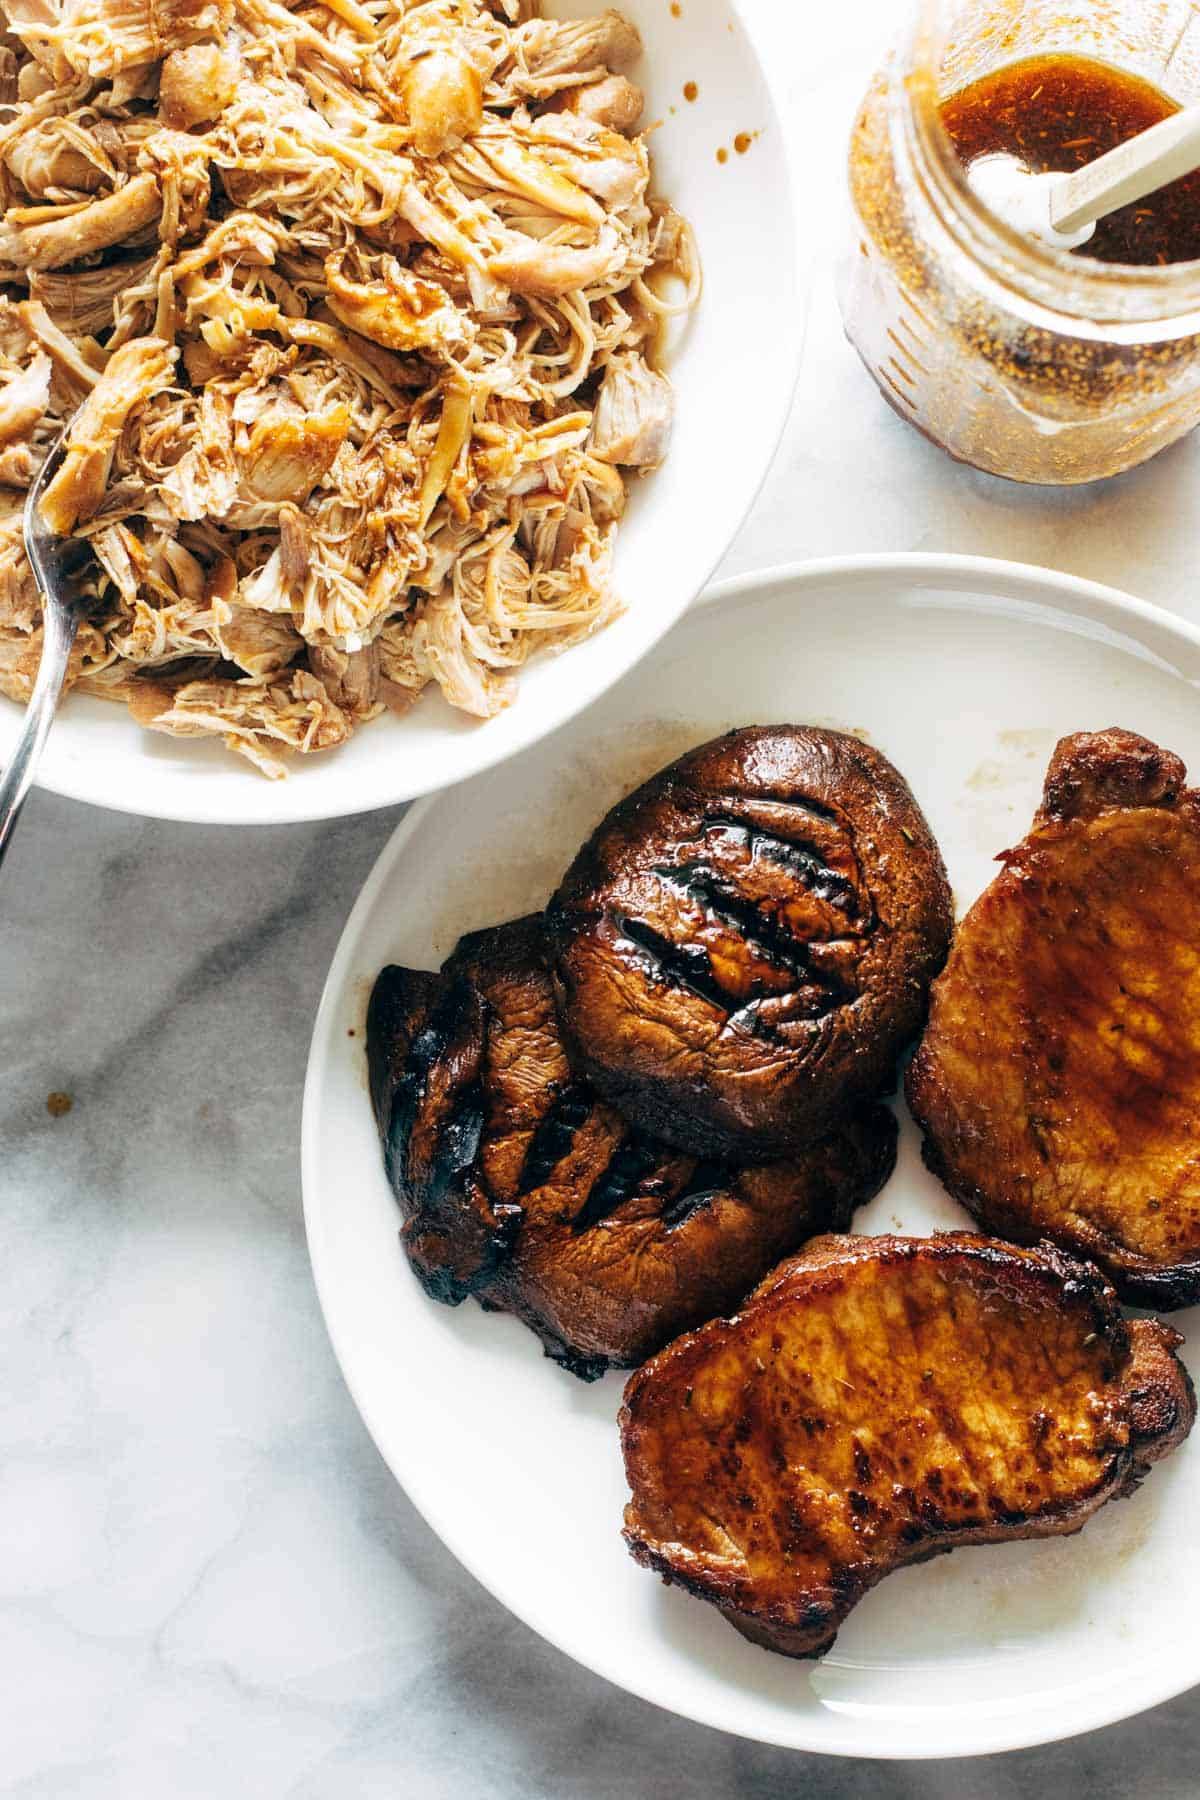 Marinated chicken, mushroom caps, and pork chops.